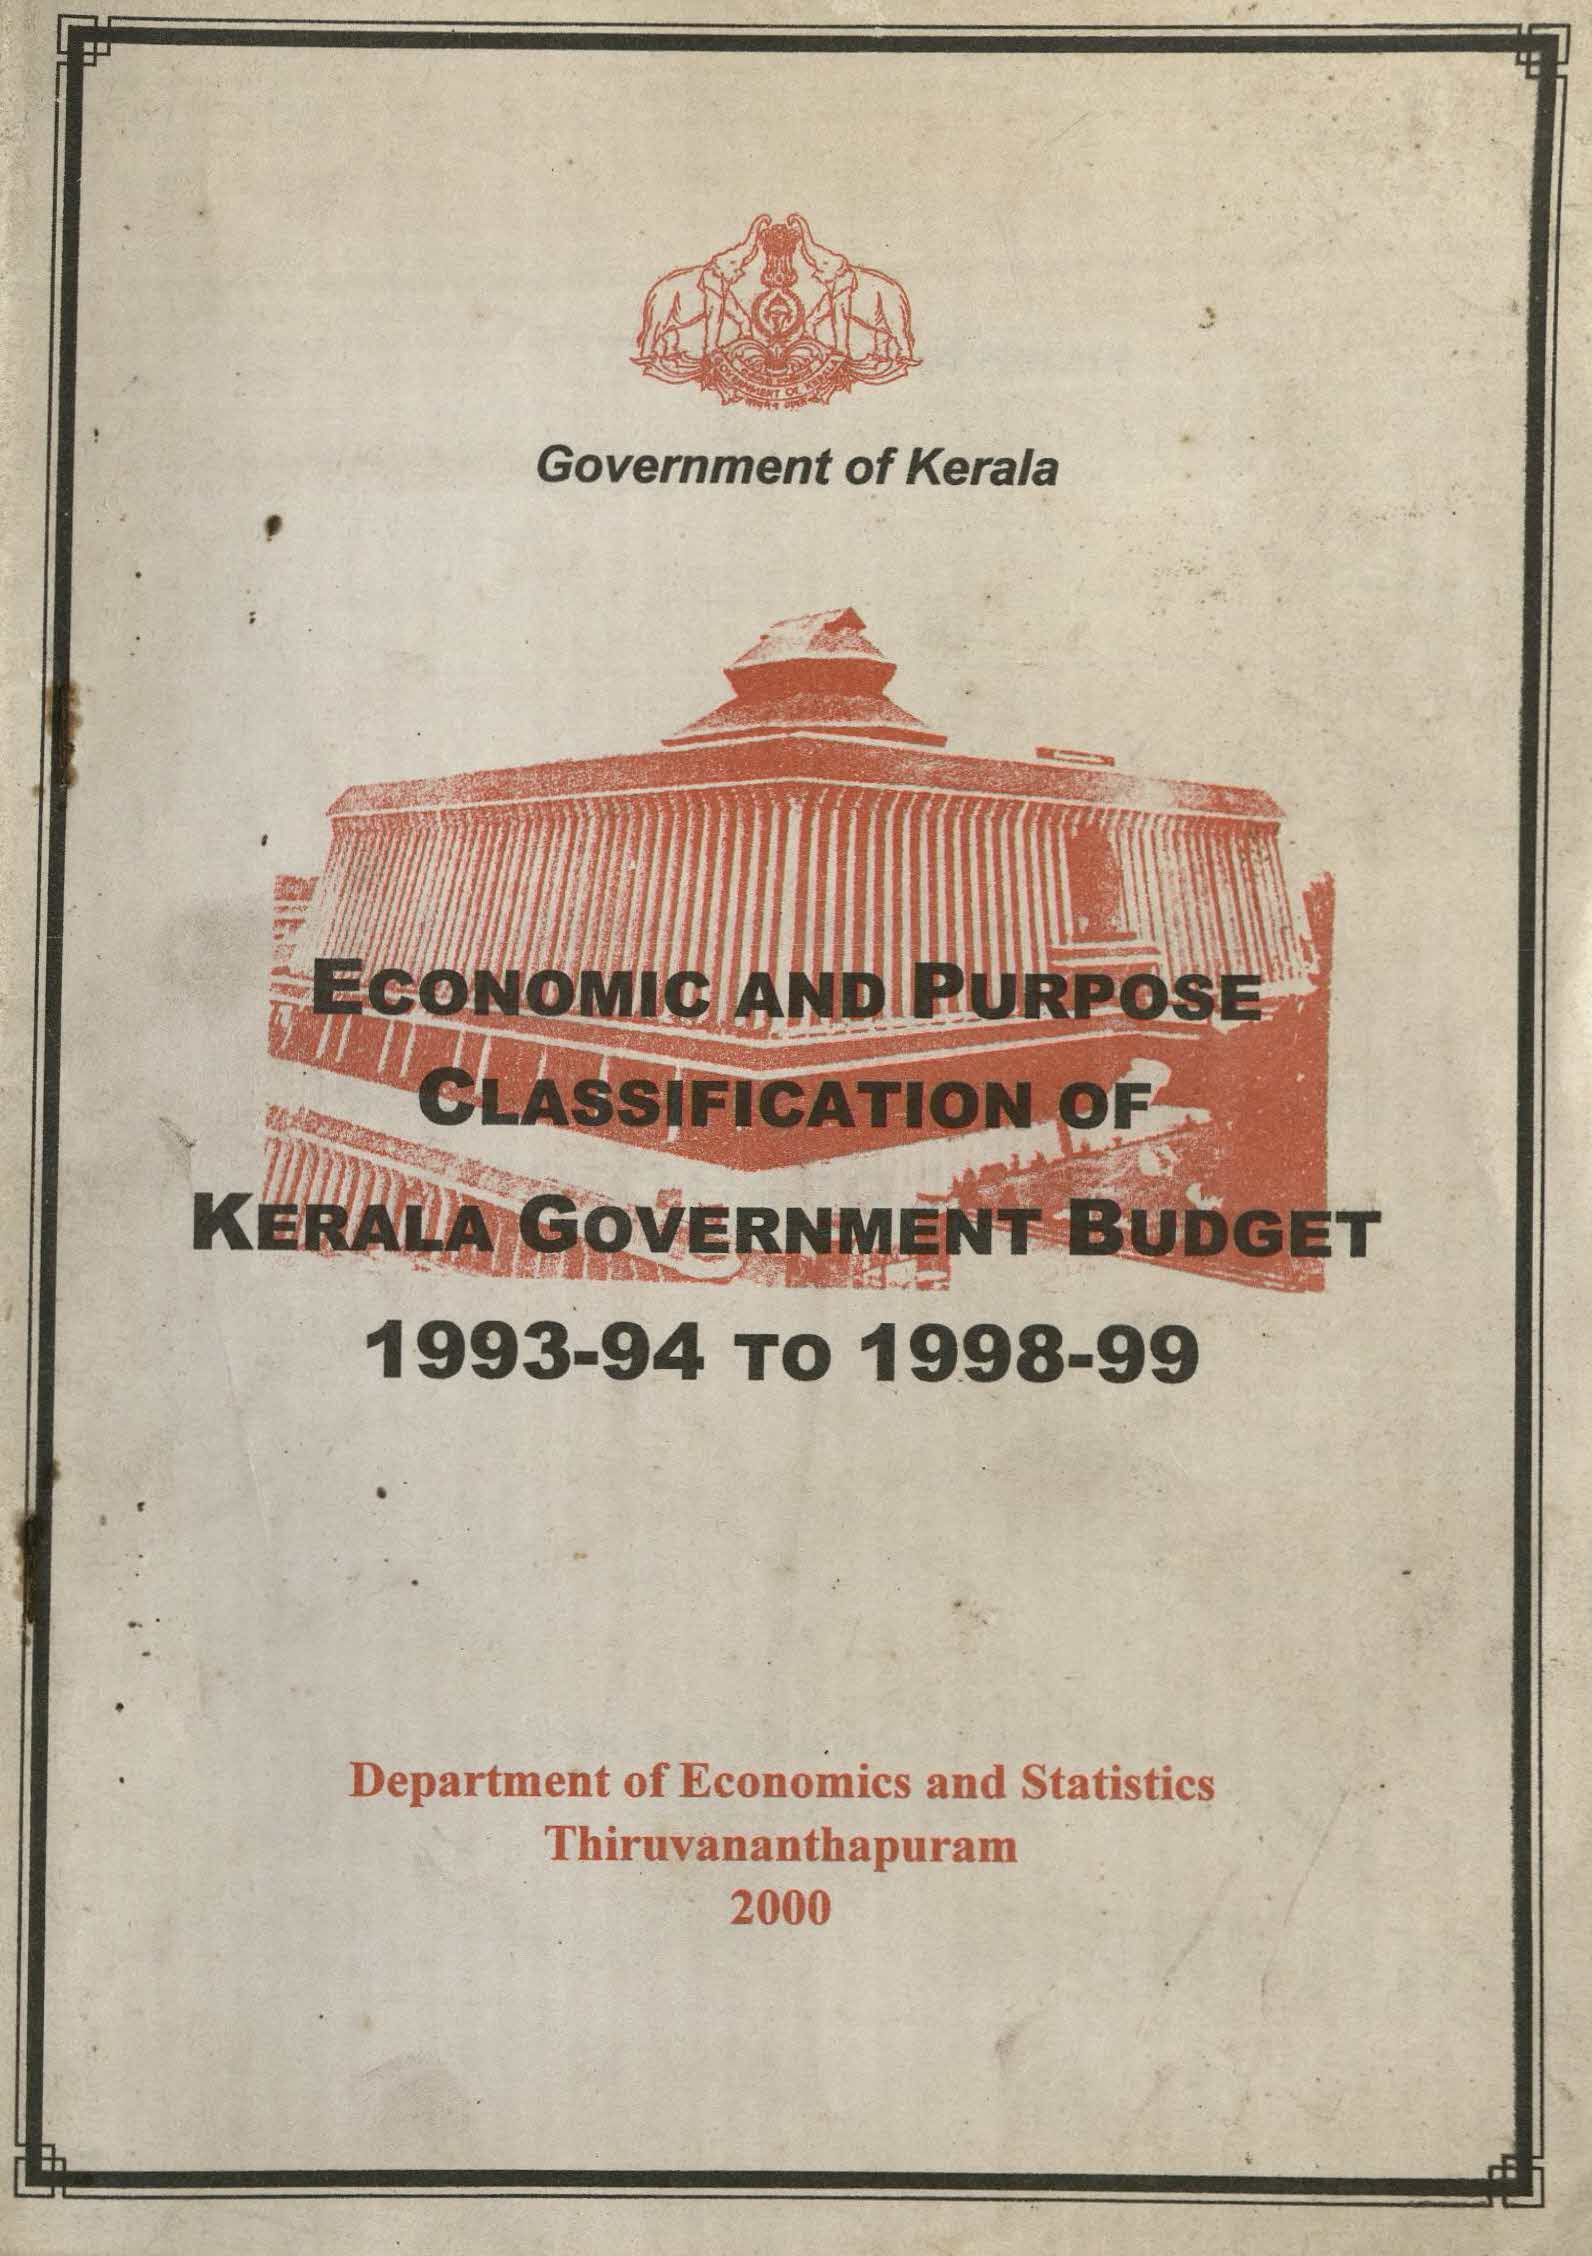 Economic And Purpose Classification of Kerala Government Budget 1993-94,1998-99